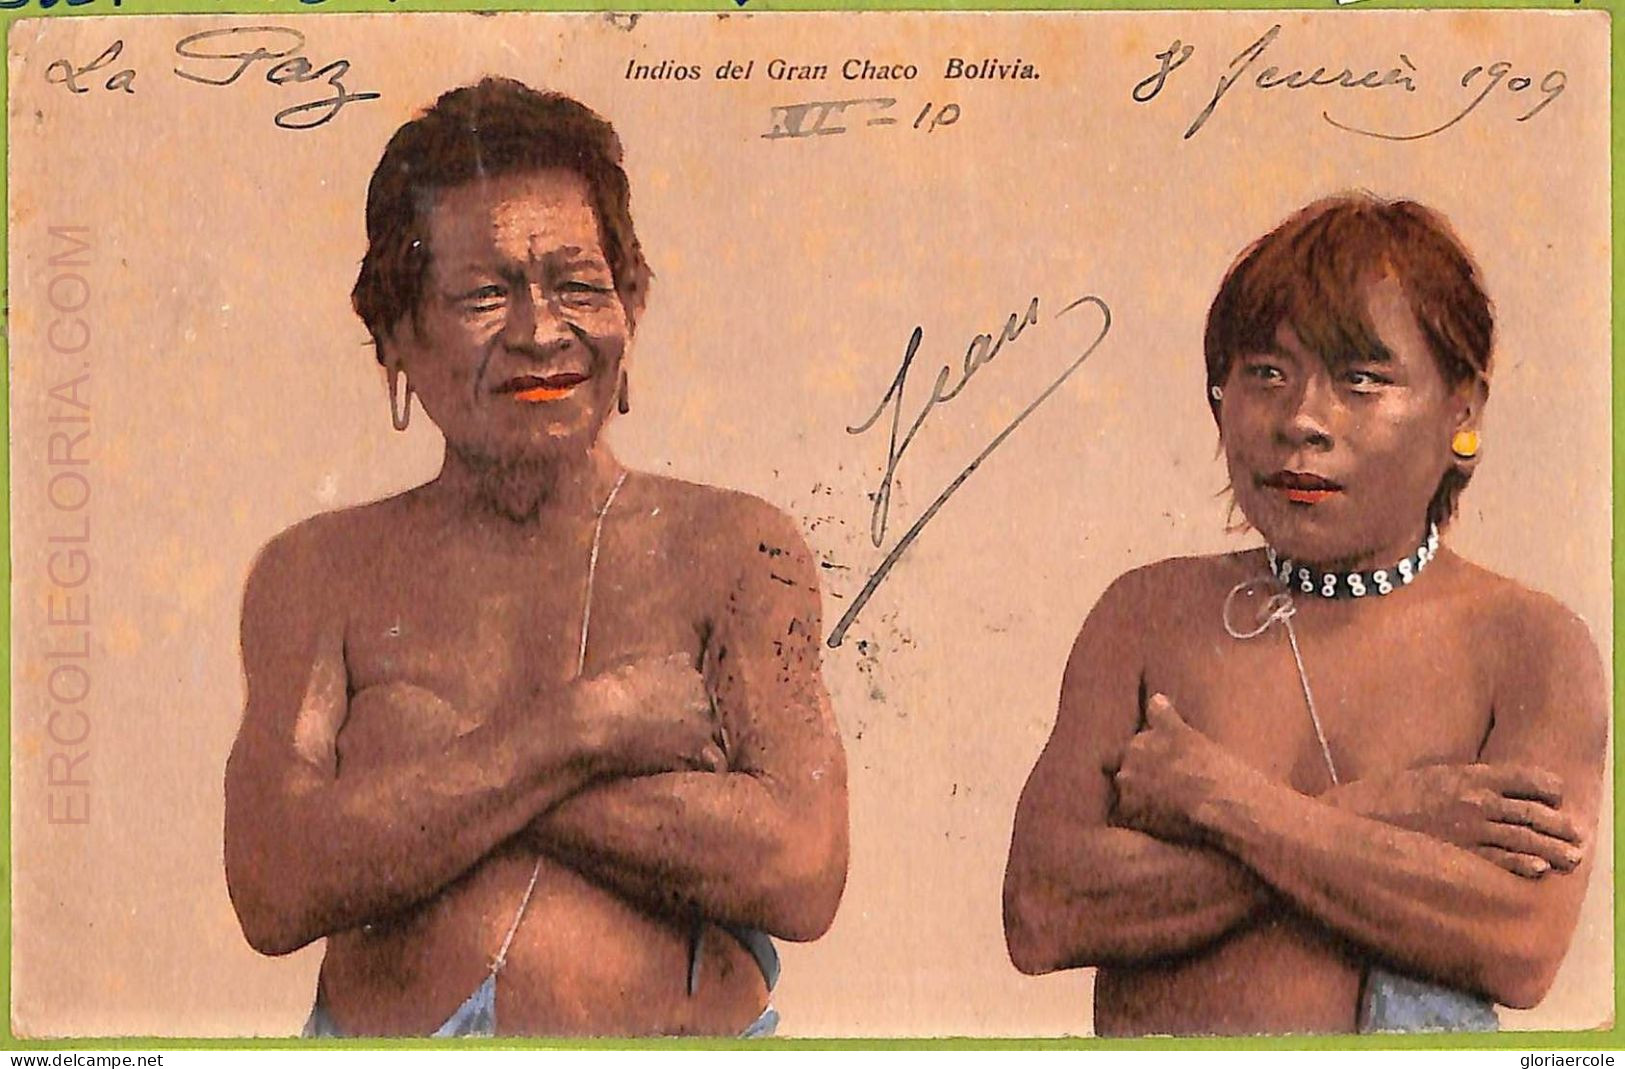 Af1431 - BOLIVIA - Vintage Postcard - Ethnic - Gran Chaco, Indios - Bolivie